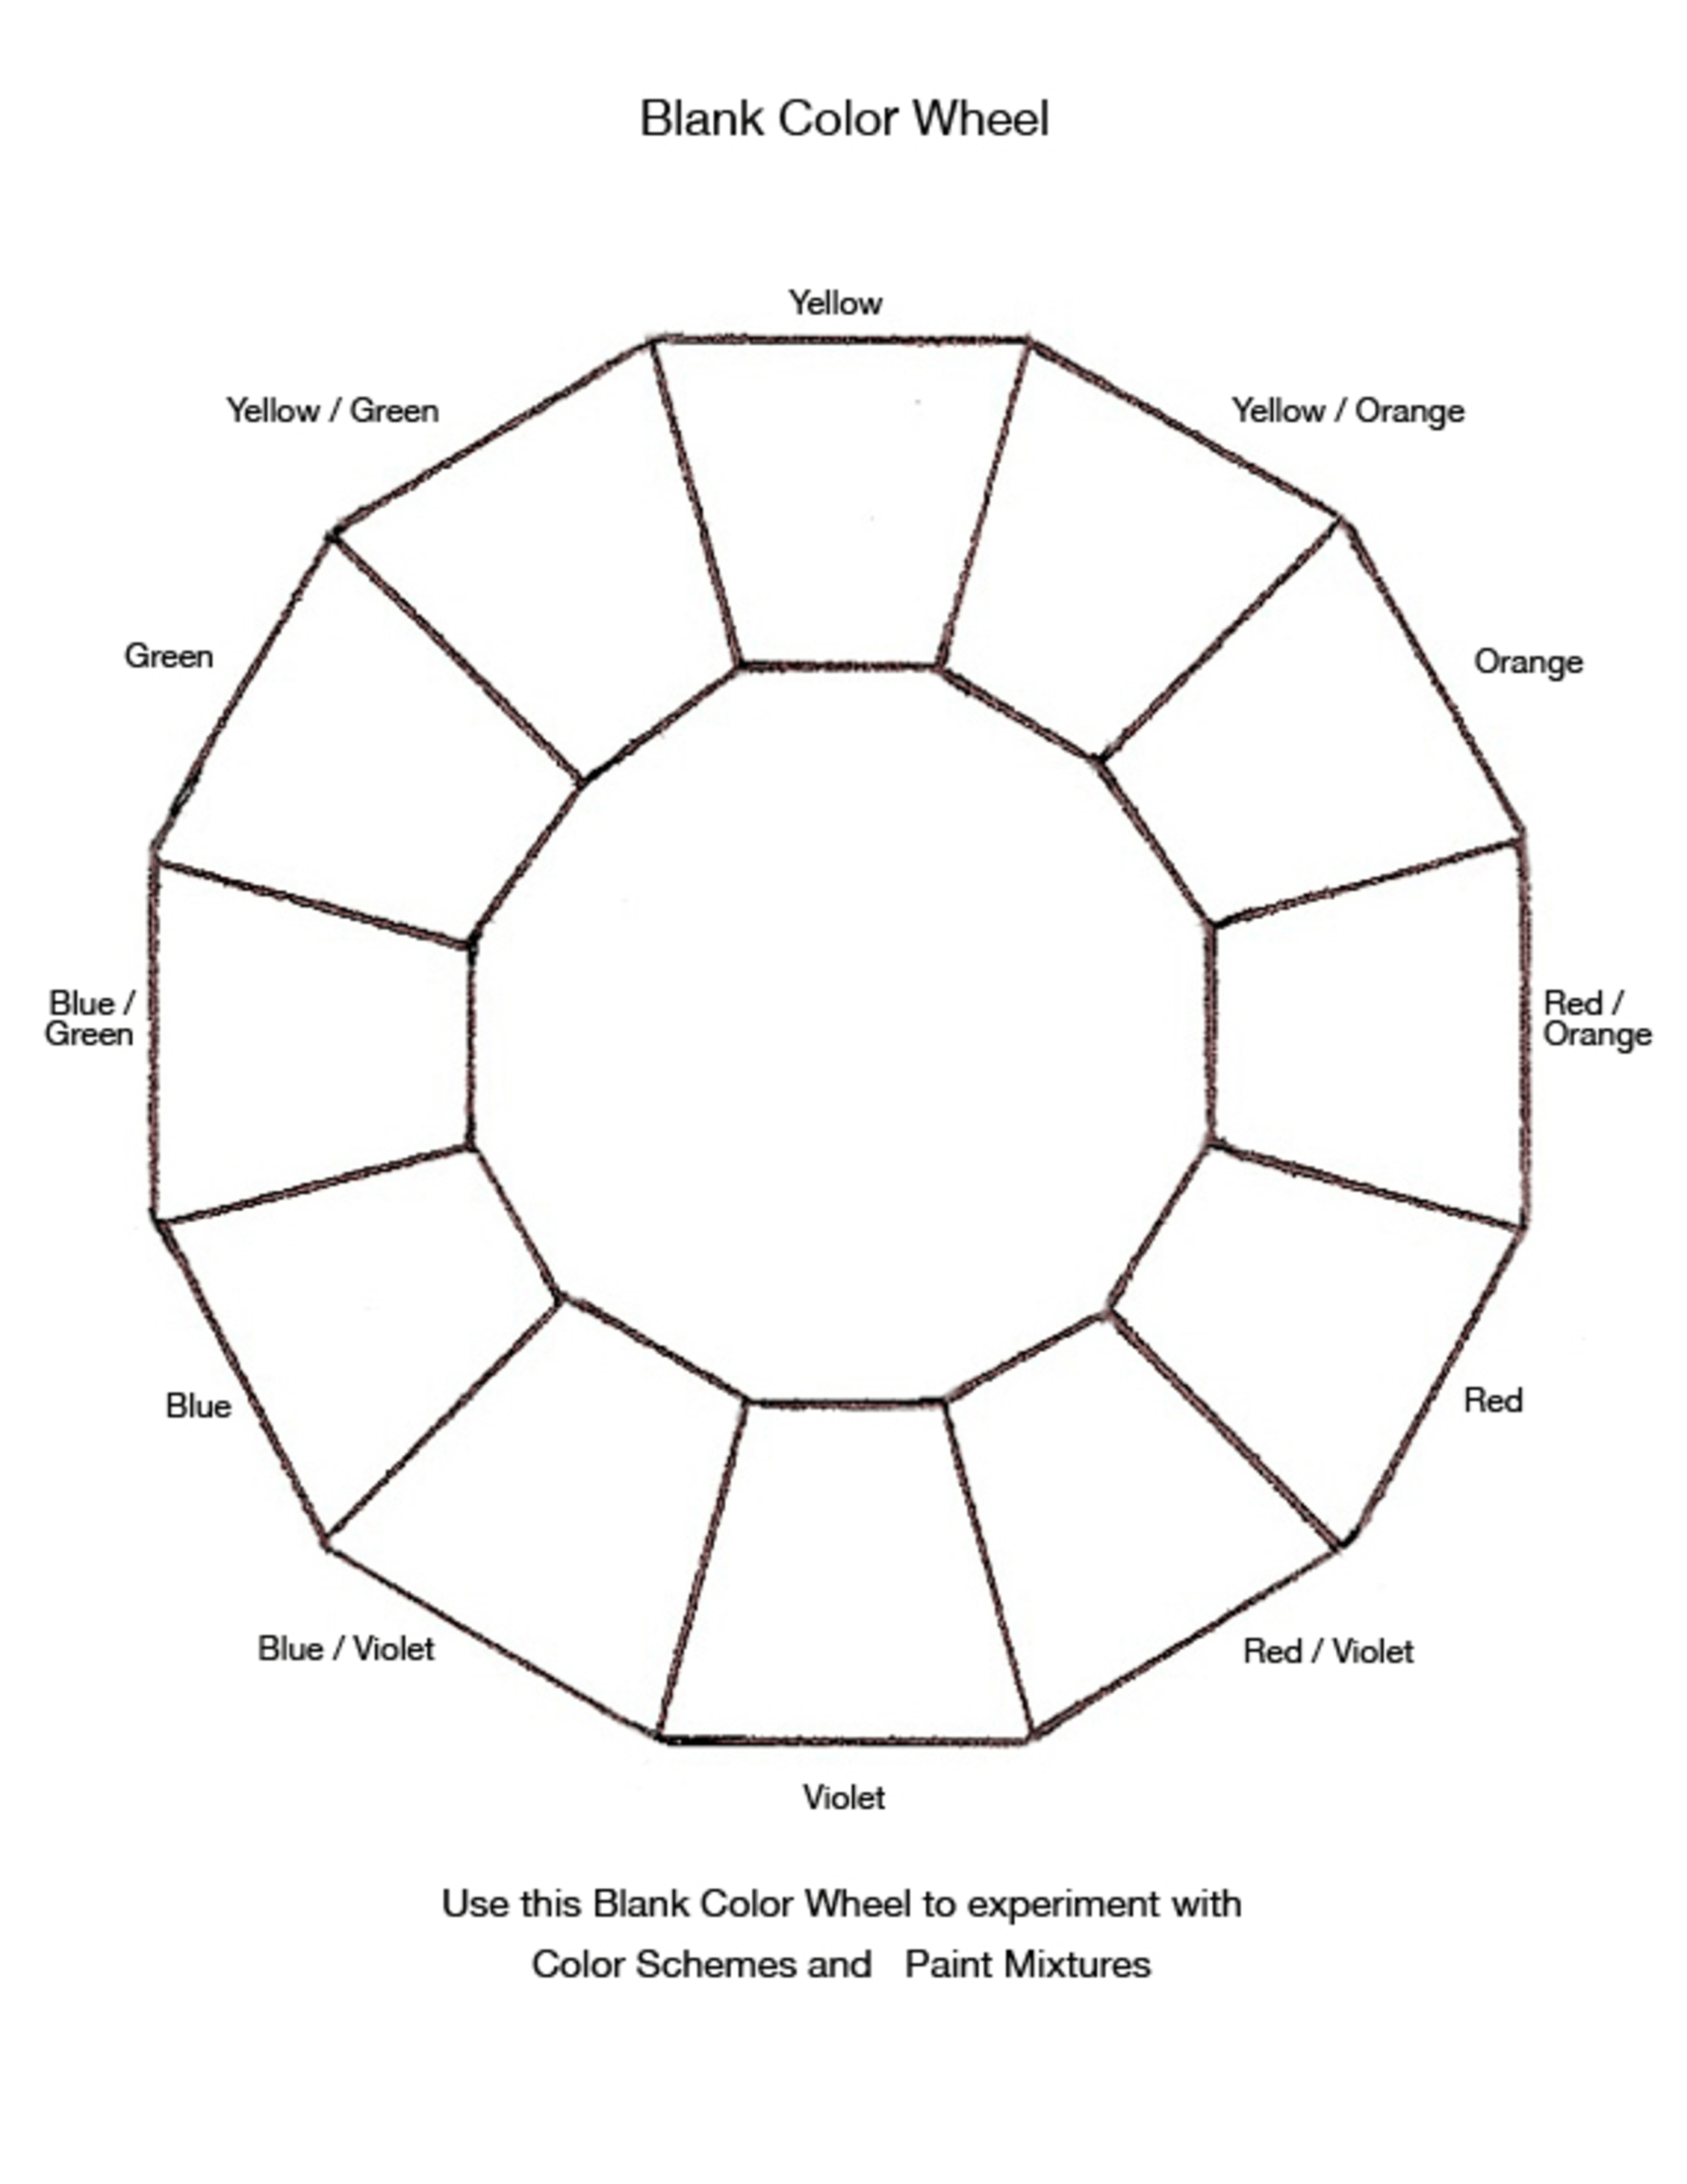 Blank Color Wheel Chart | Templates At Allbusinesstemplates With Blank Color Wheel Template